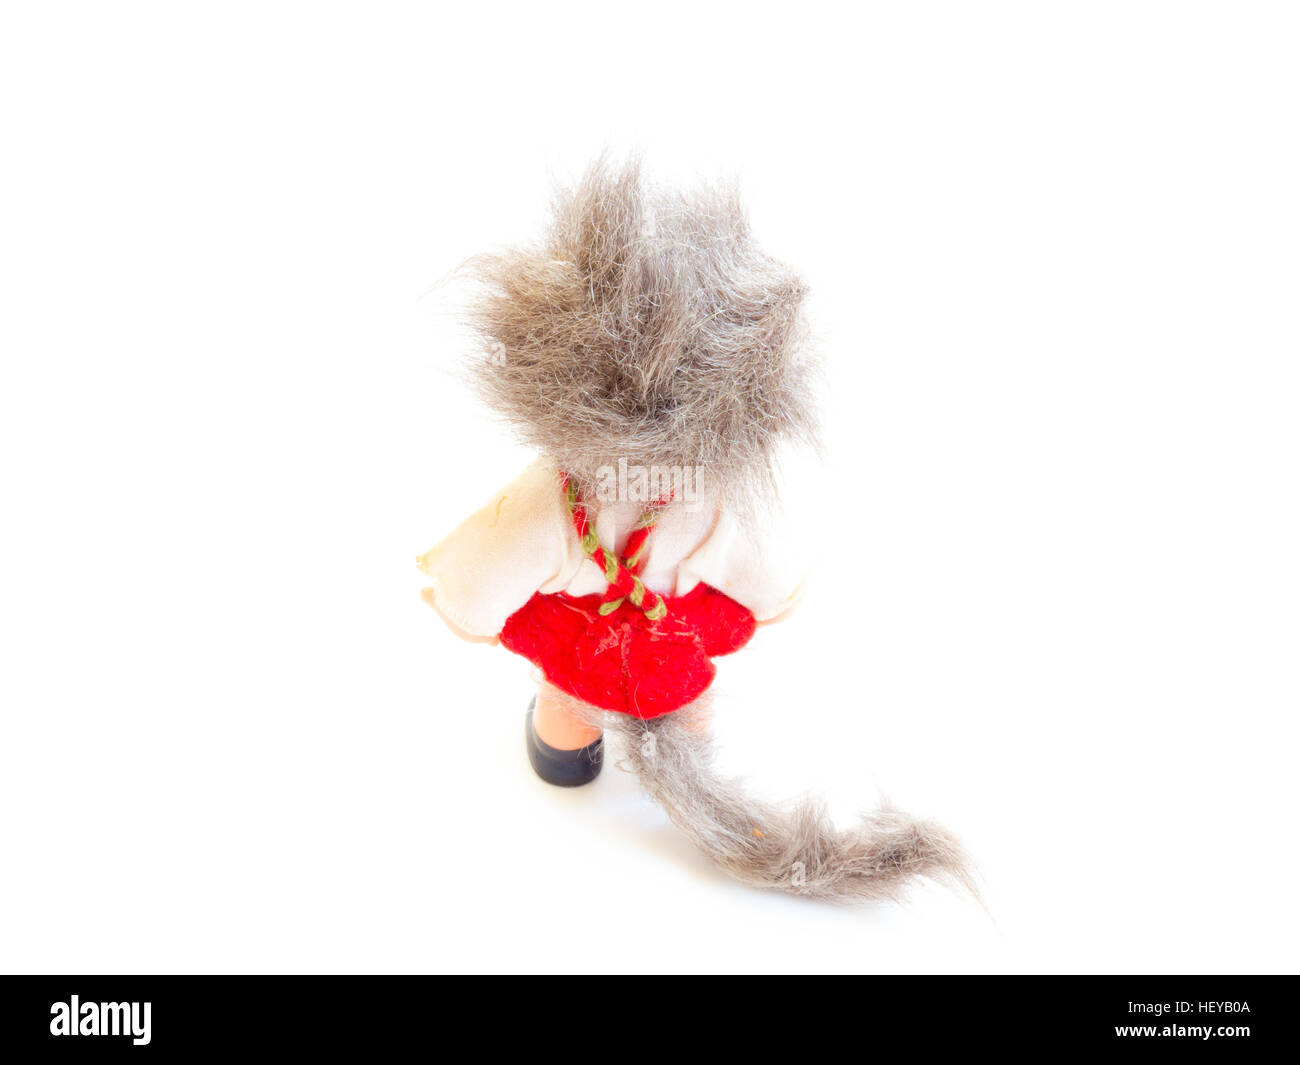 The Miniature toy dog. Stock Photo